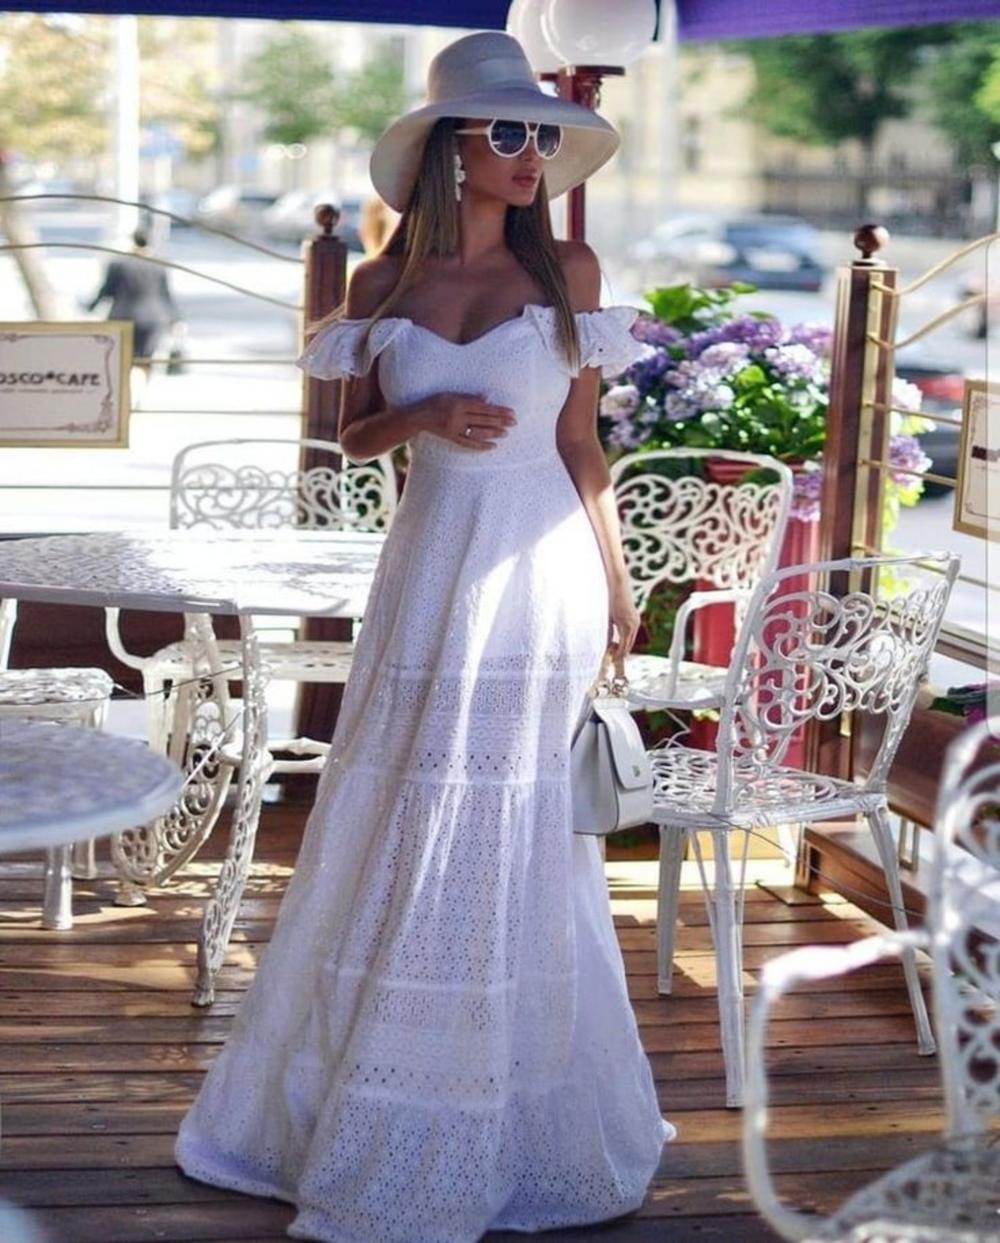 Womens Long Dresses for Summer Vacation, Short & Long Sleeves, White Floral & Polka Dot